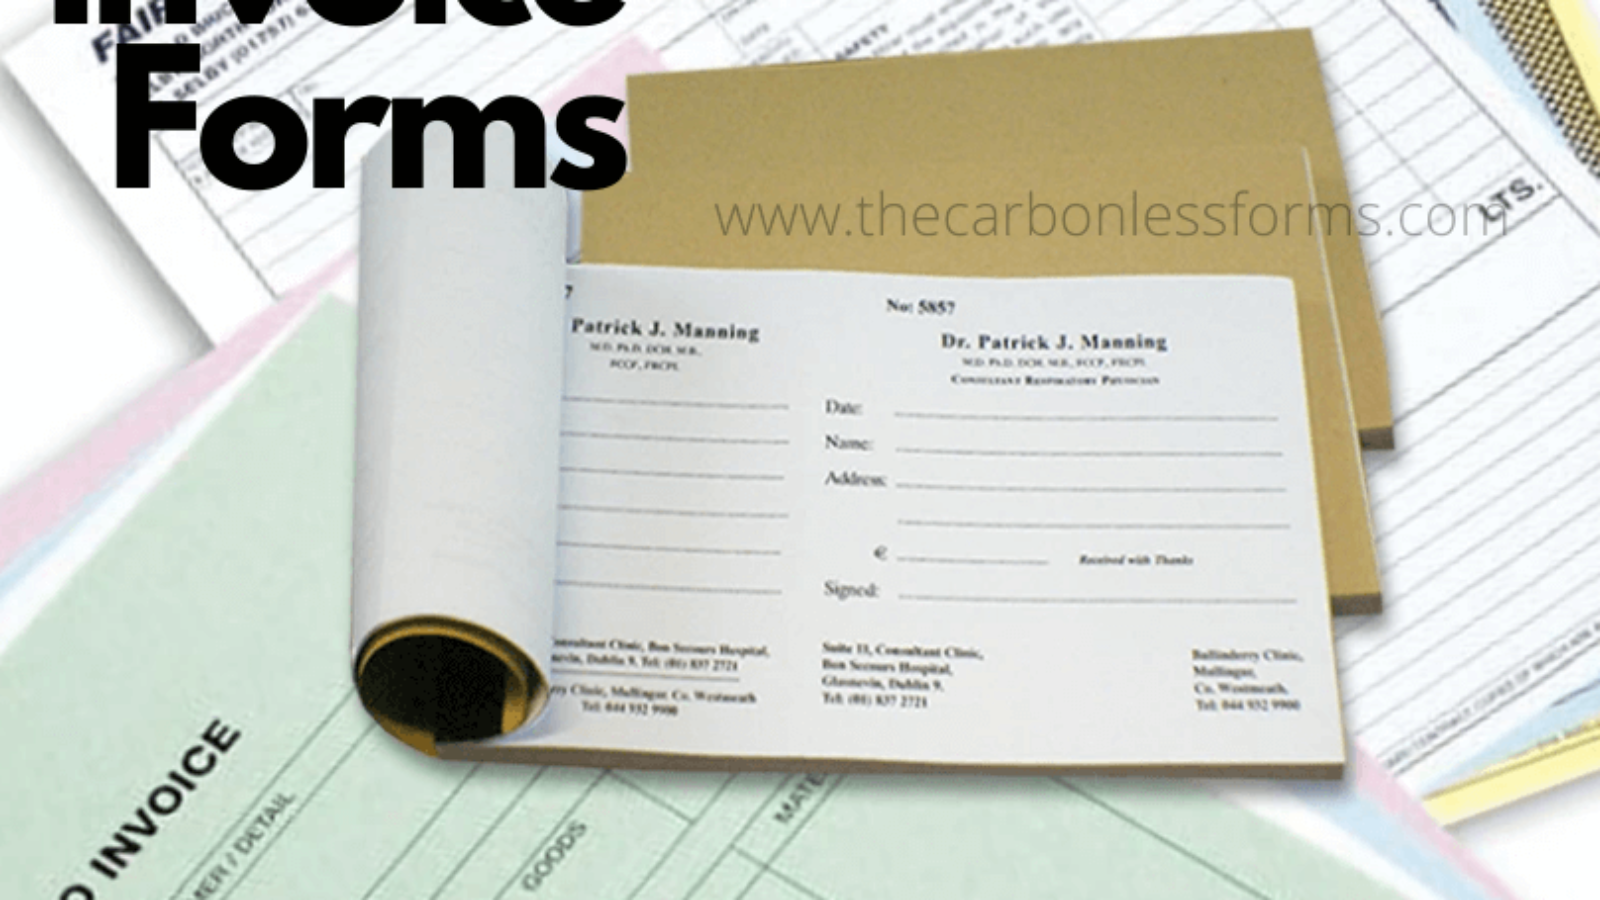 invoice forms custom